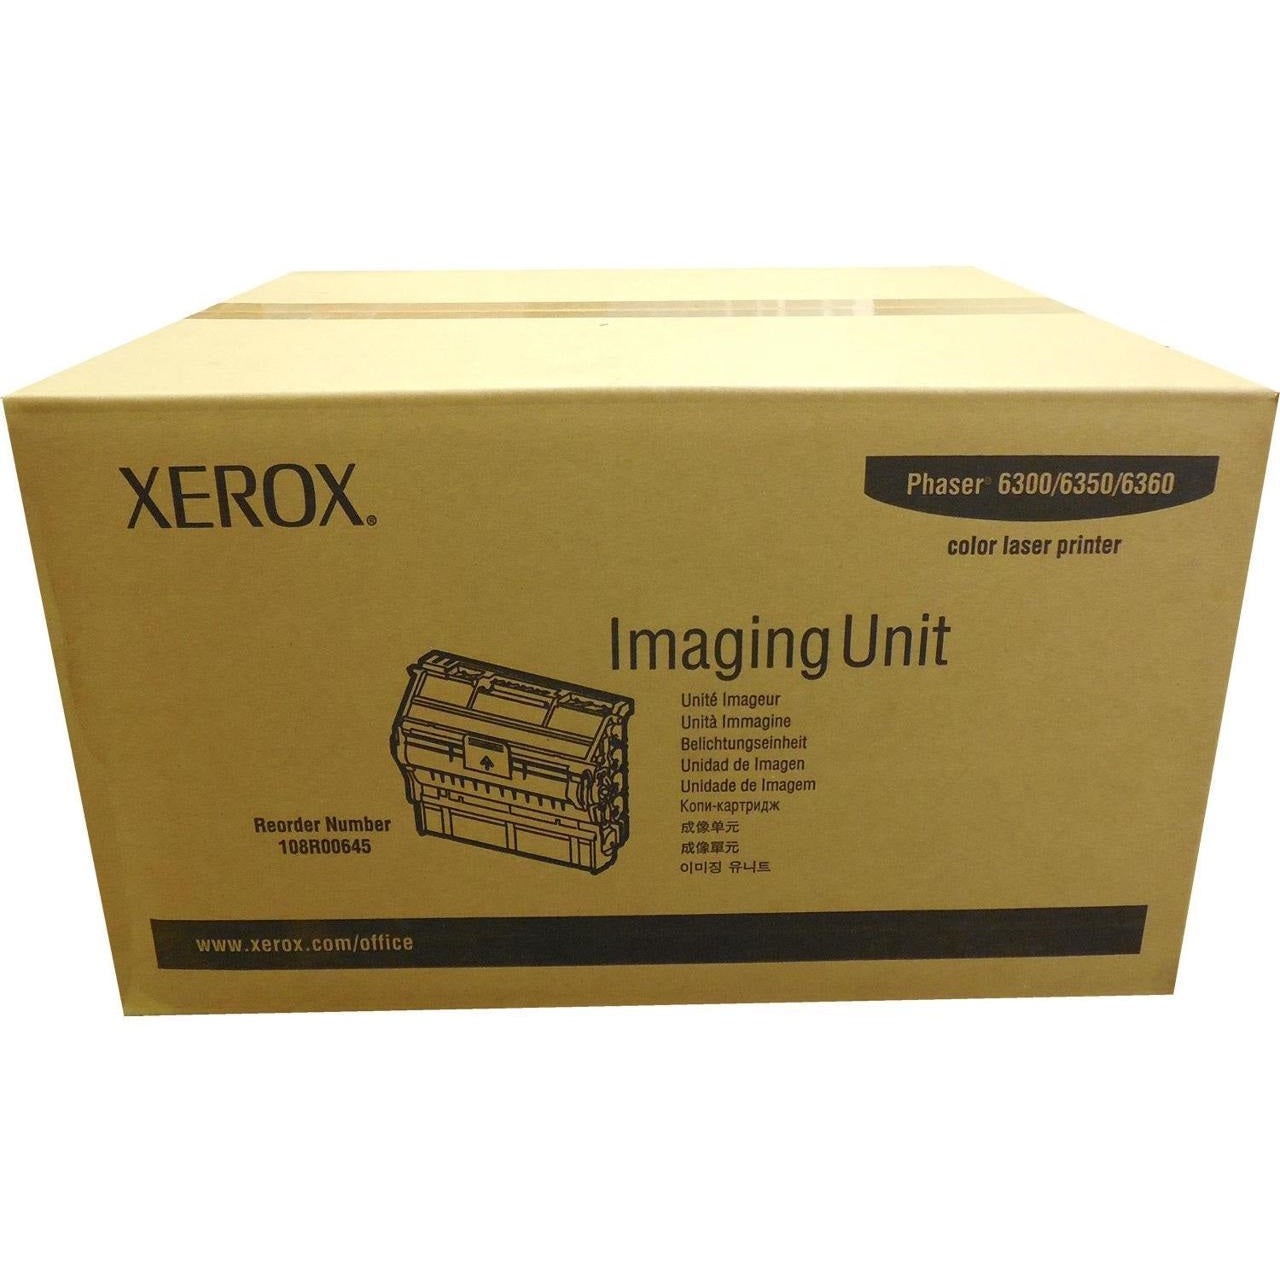 Genuine Xerox 108R00645 Imaging Unit for Phaser 6300/6350/6360 Printer